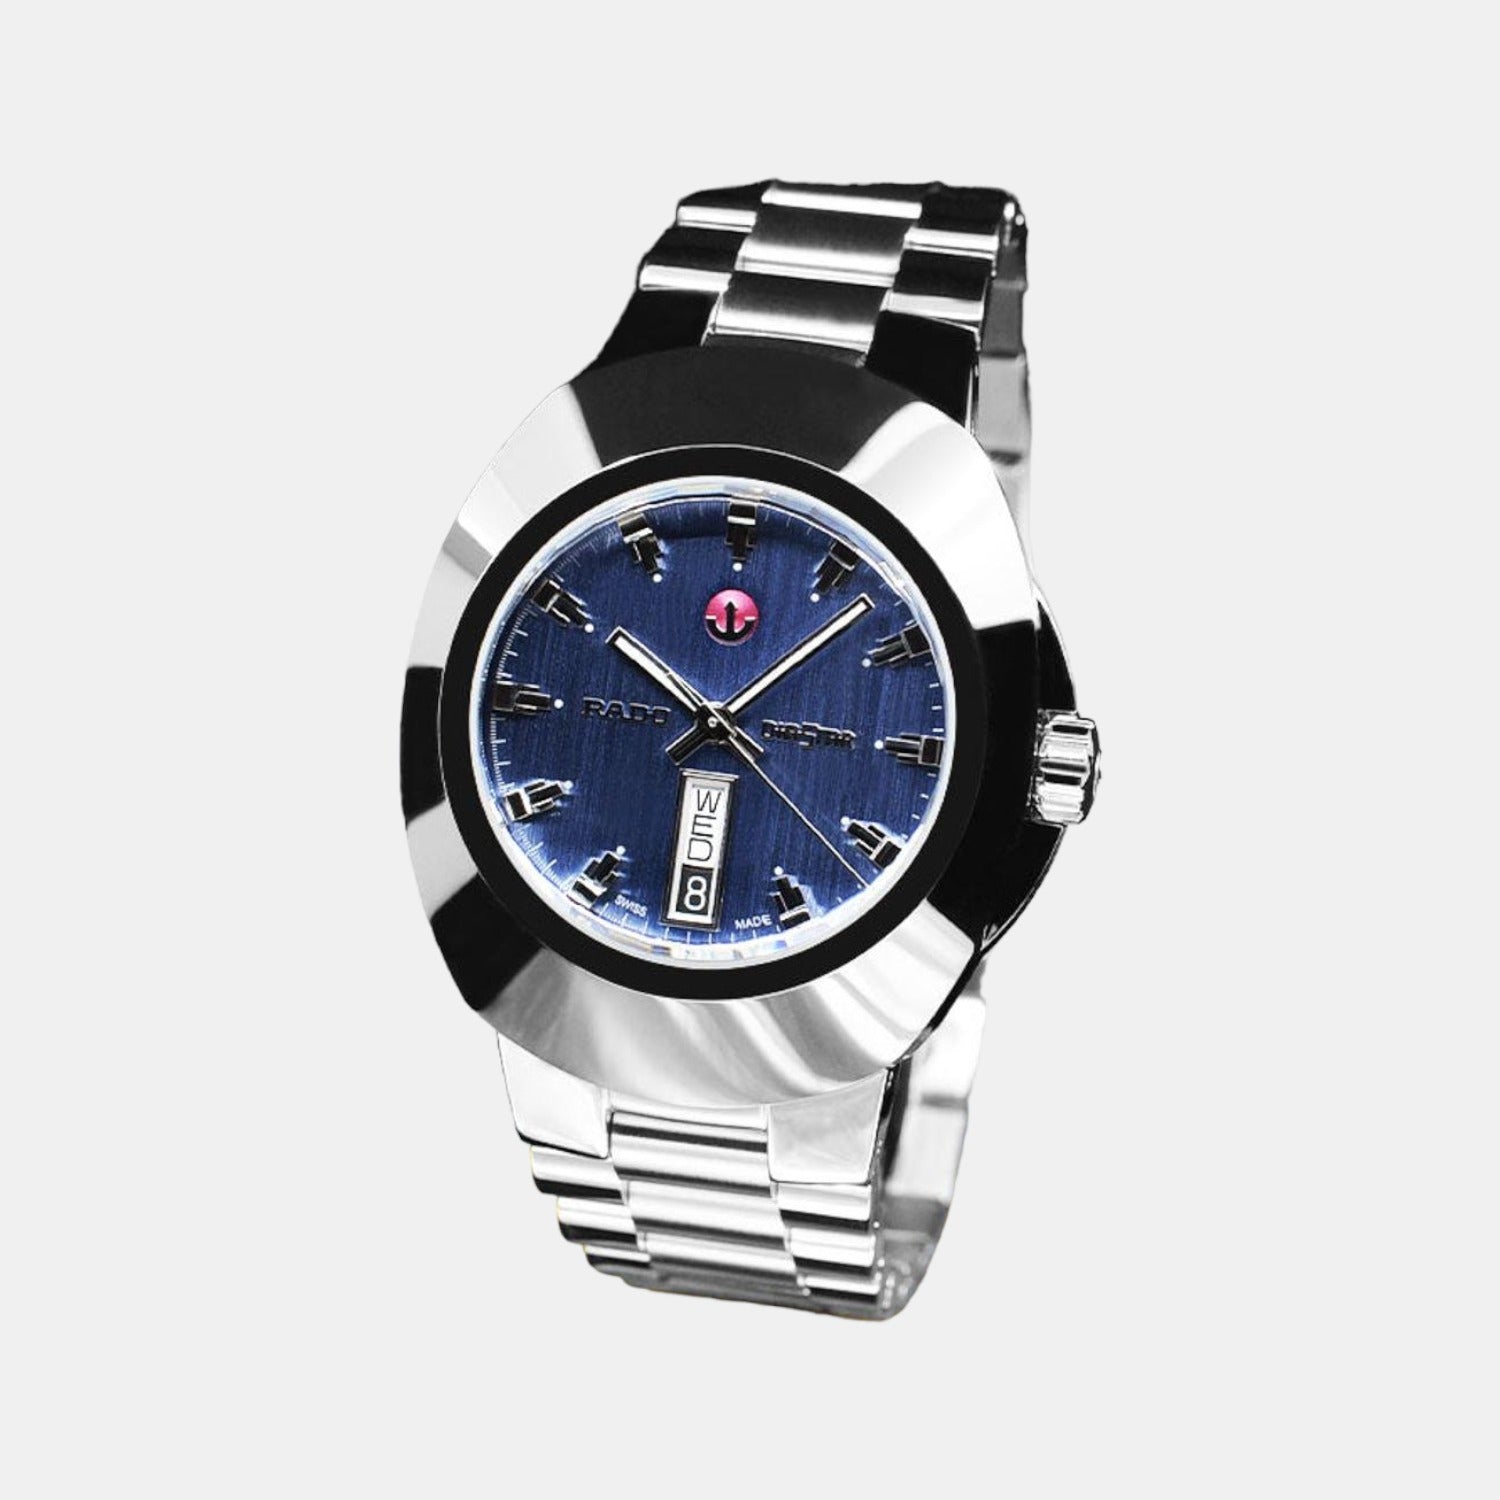 Are Rado Watches Considered Luxury?